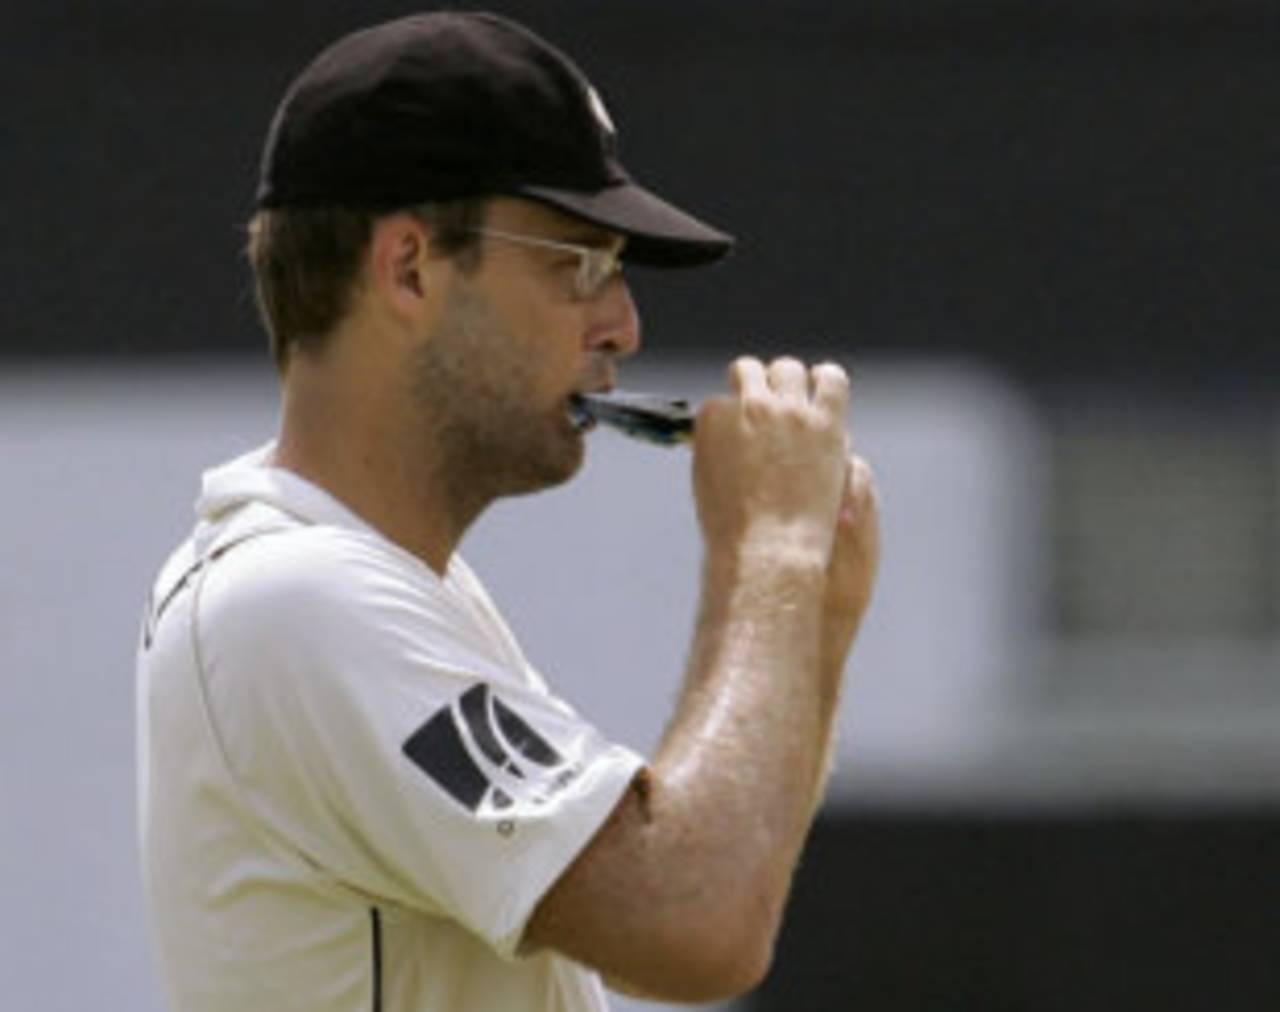 Daniel Vettori helps himself to an ice cream, Sri Lanka v New Zealand, 2nd Test, SSC, Colombo, 4th day, August 29, 2009 